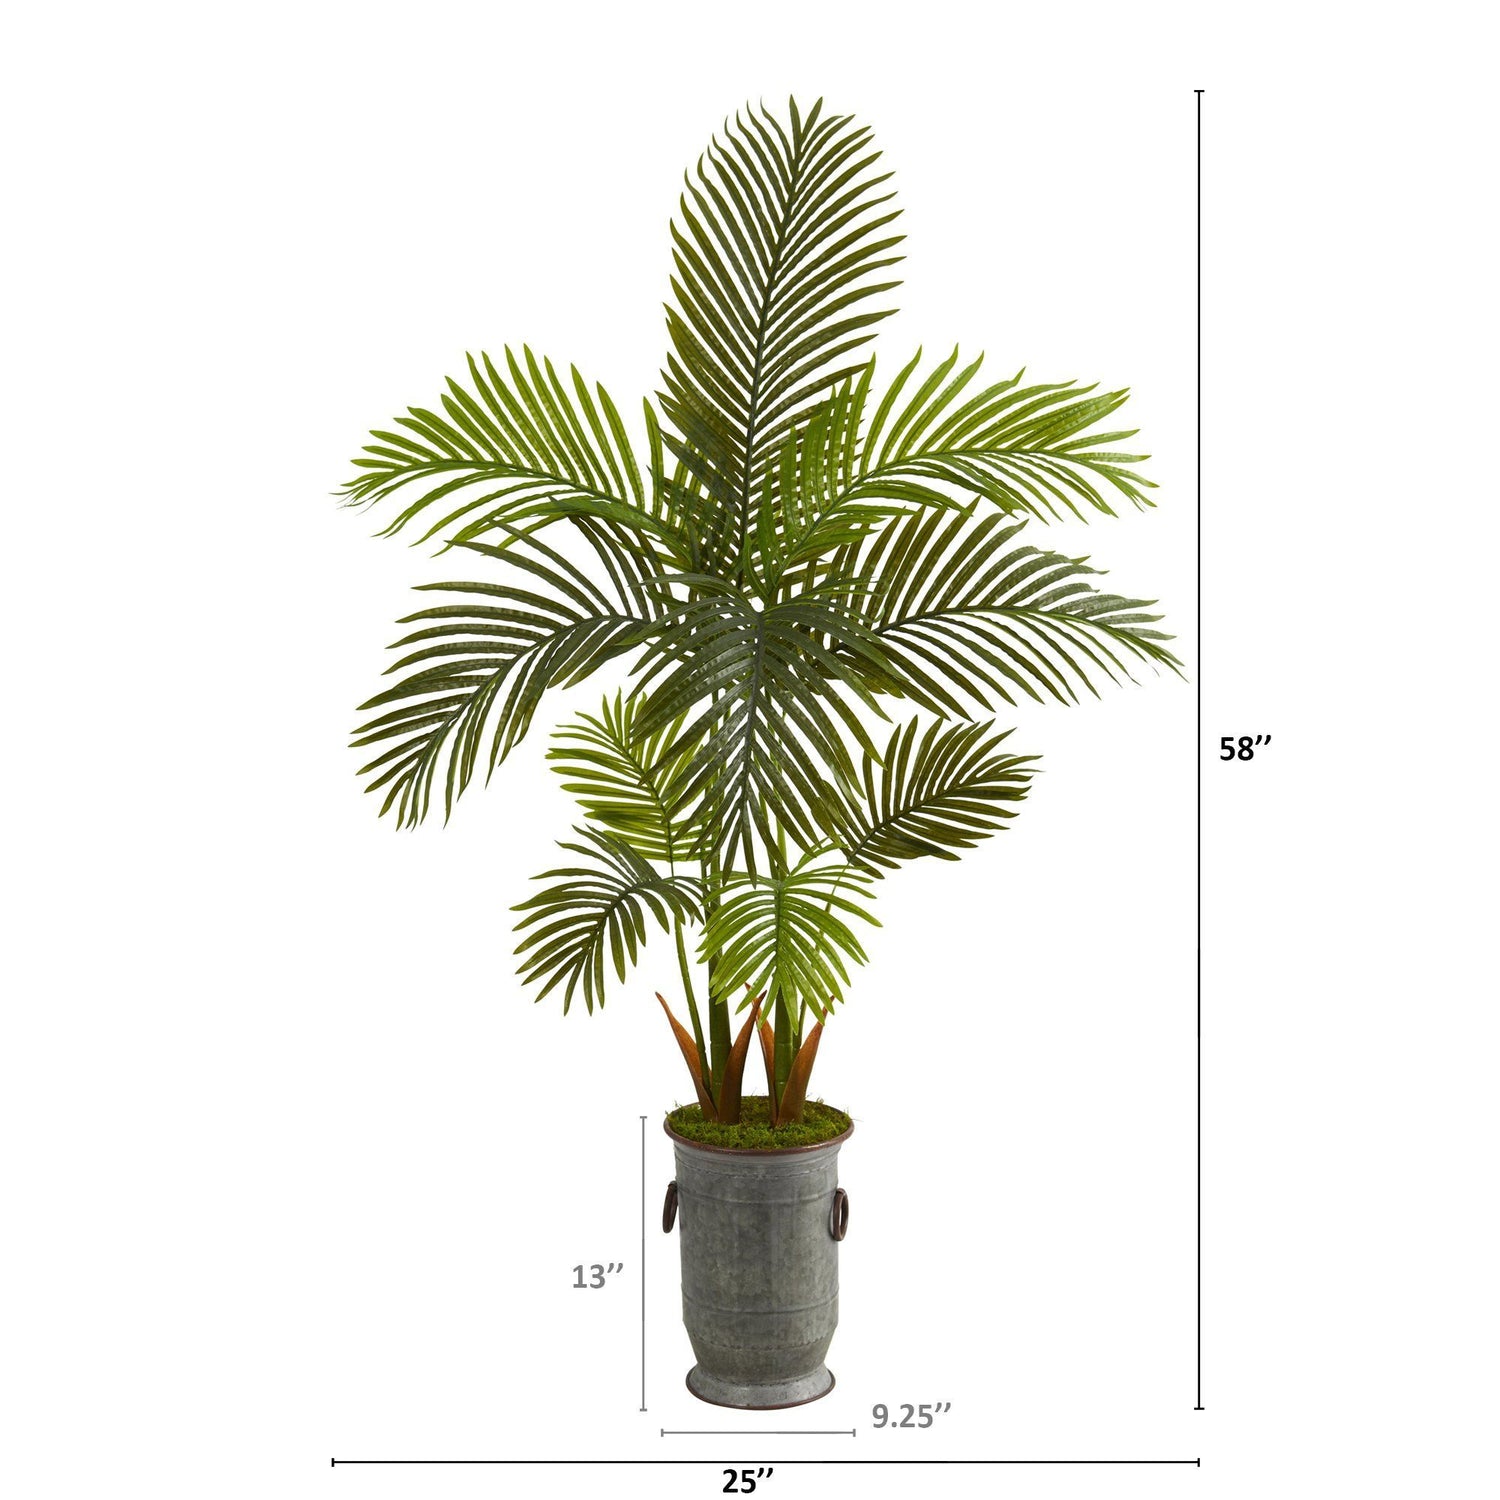 58” Areca Palm Artificial Tree in Vintage Metal Planter